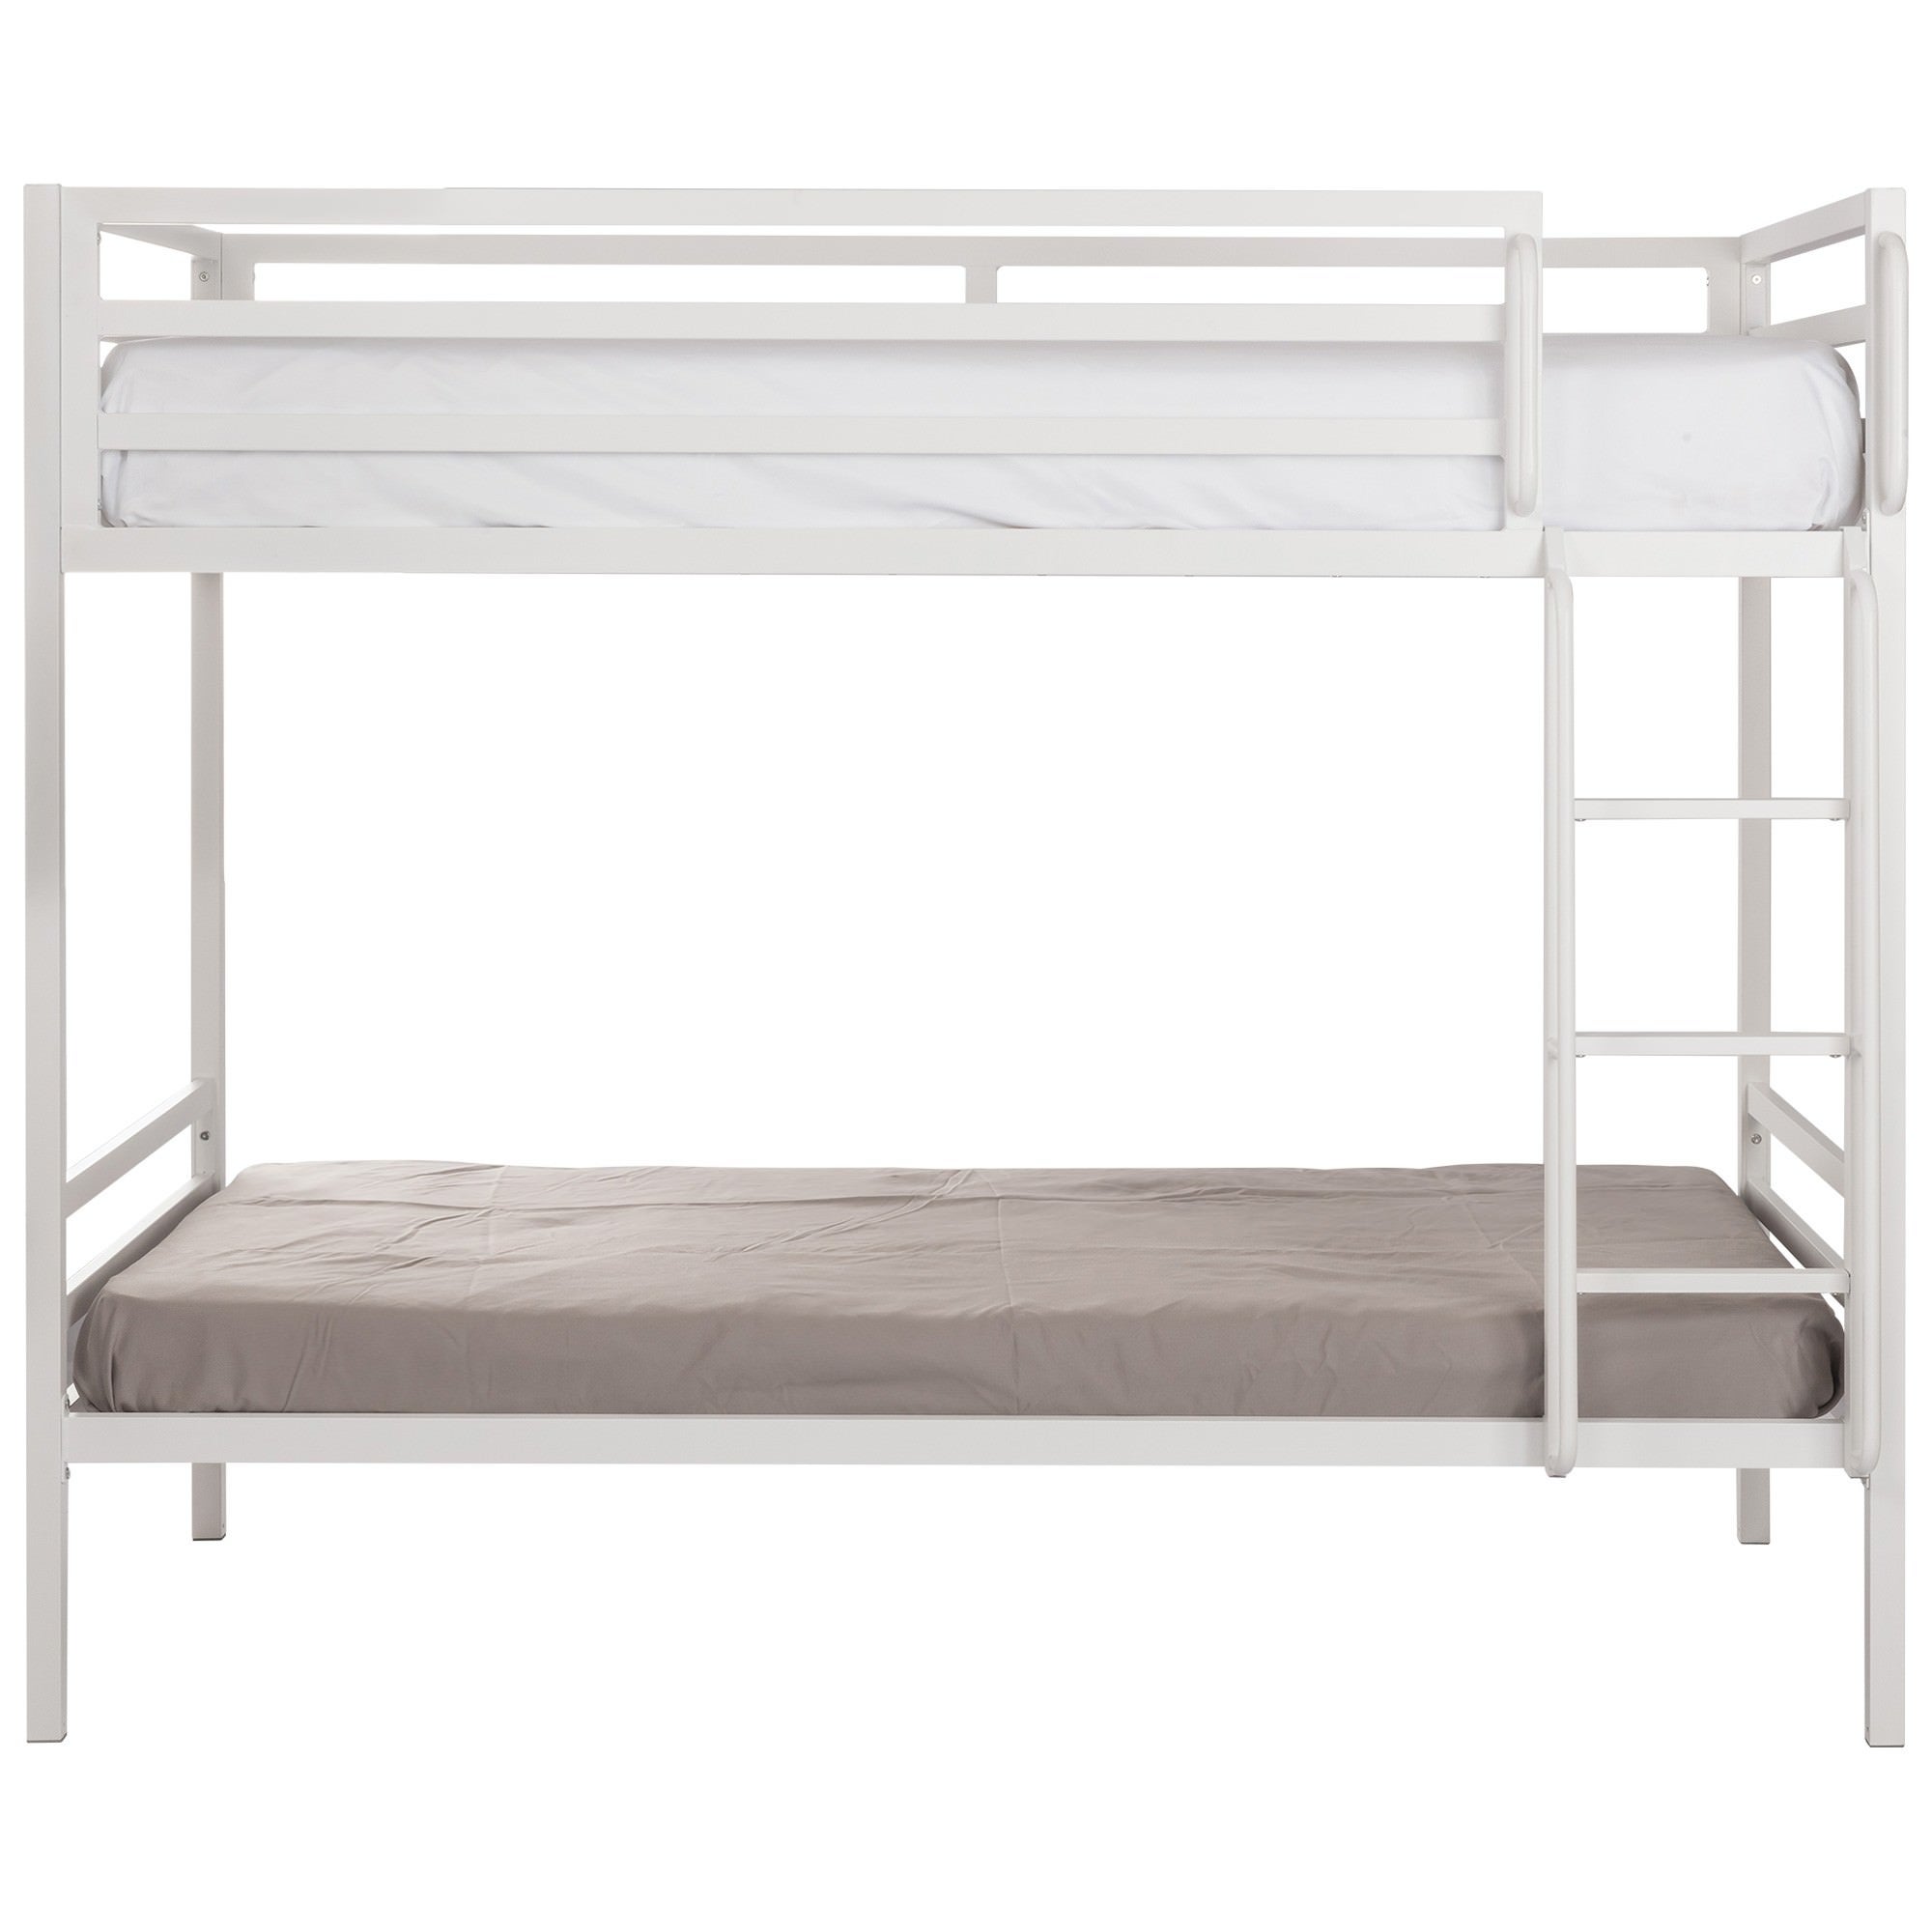 Castle Commercial Grade Metal Bunk Bed, Single, White